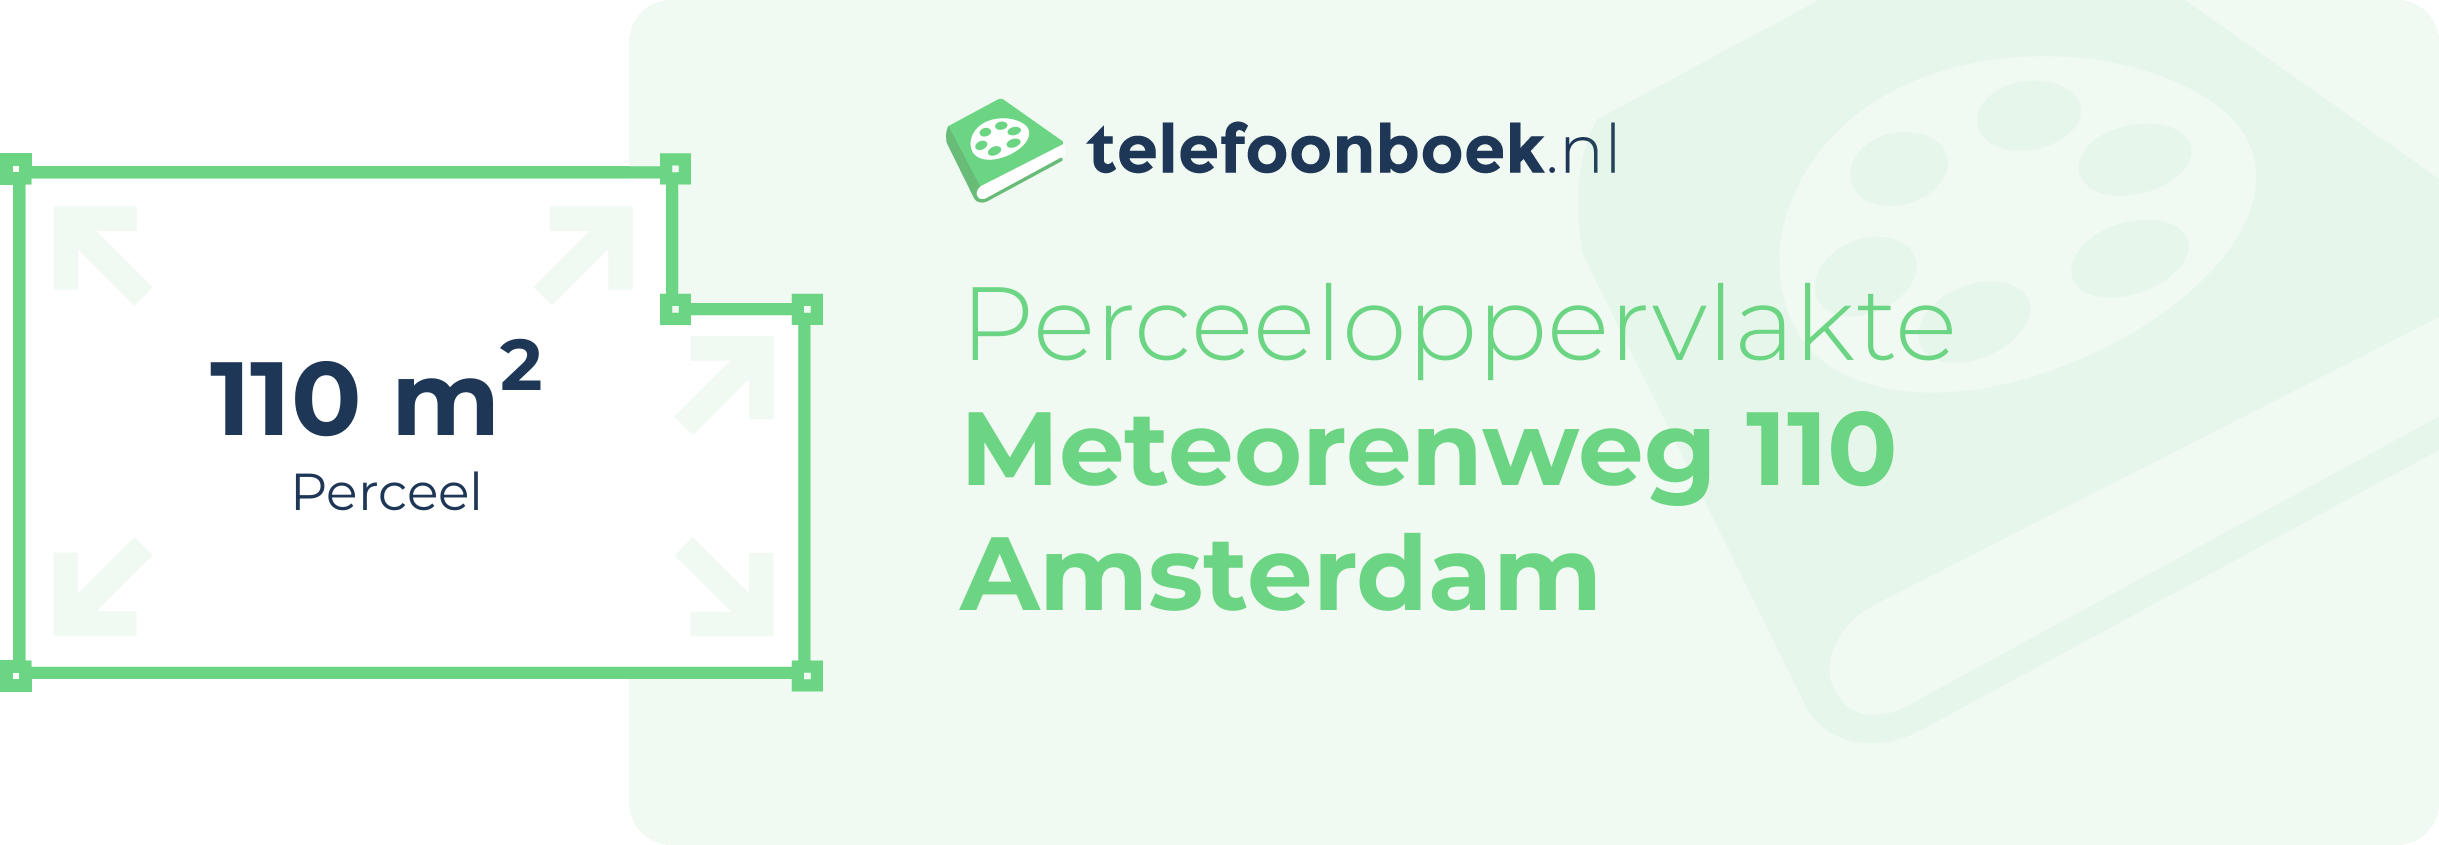 Perceeloppervlakte Meteorenweg 110 Amsterdam